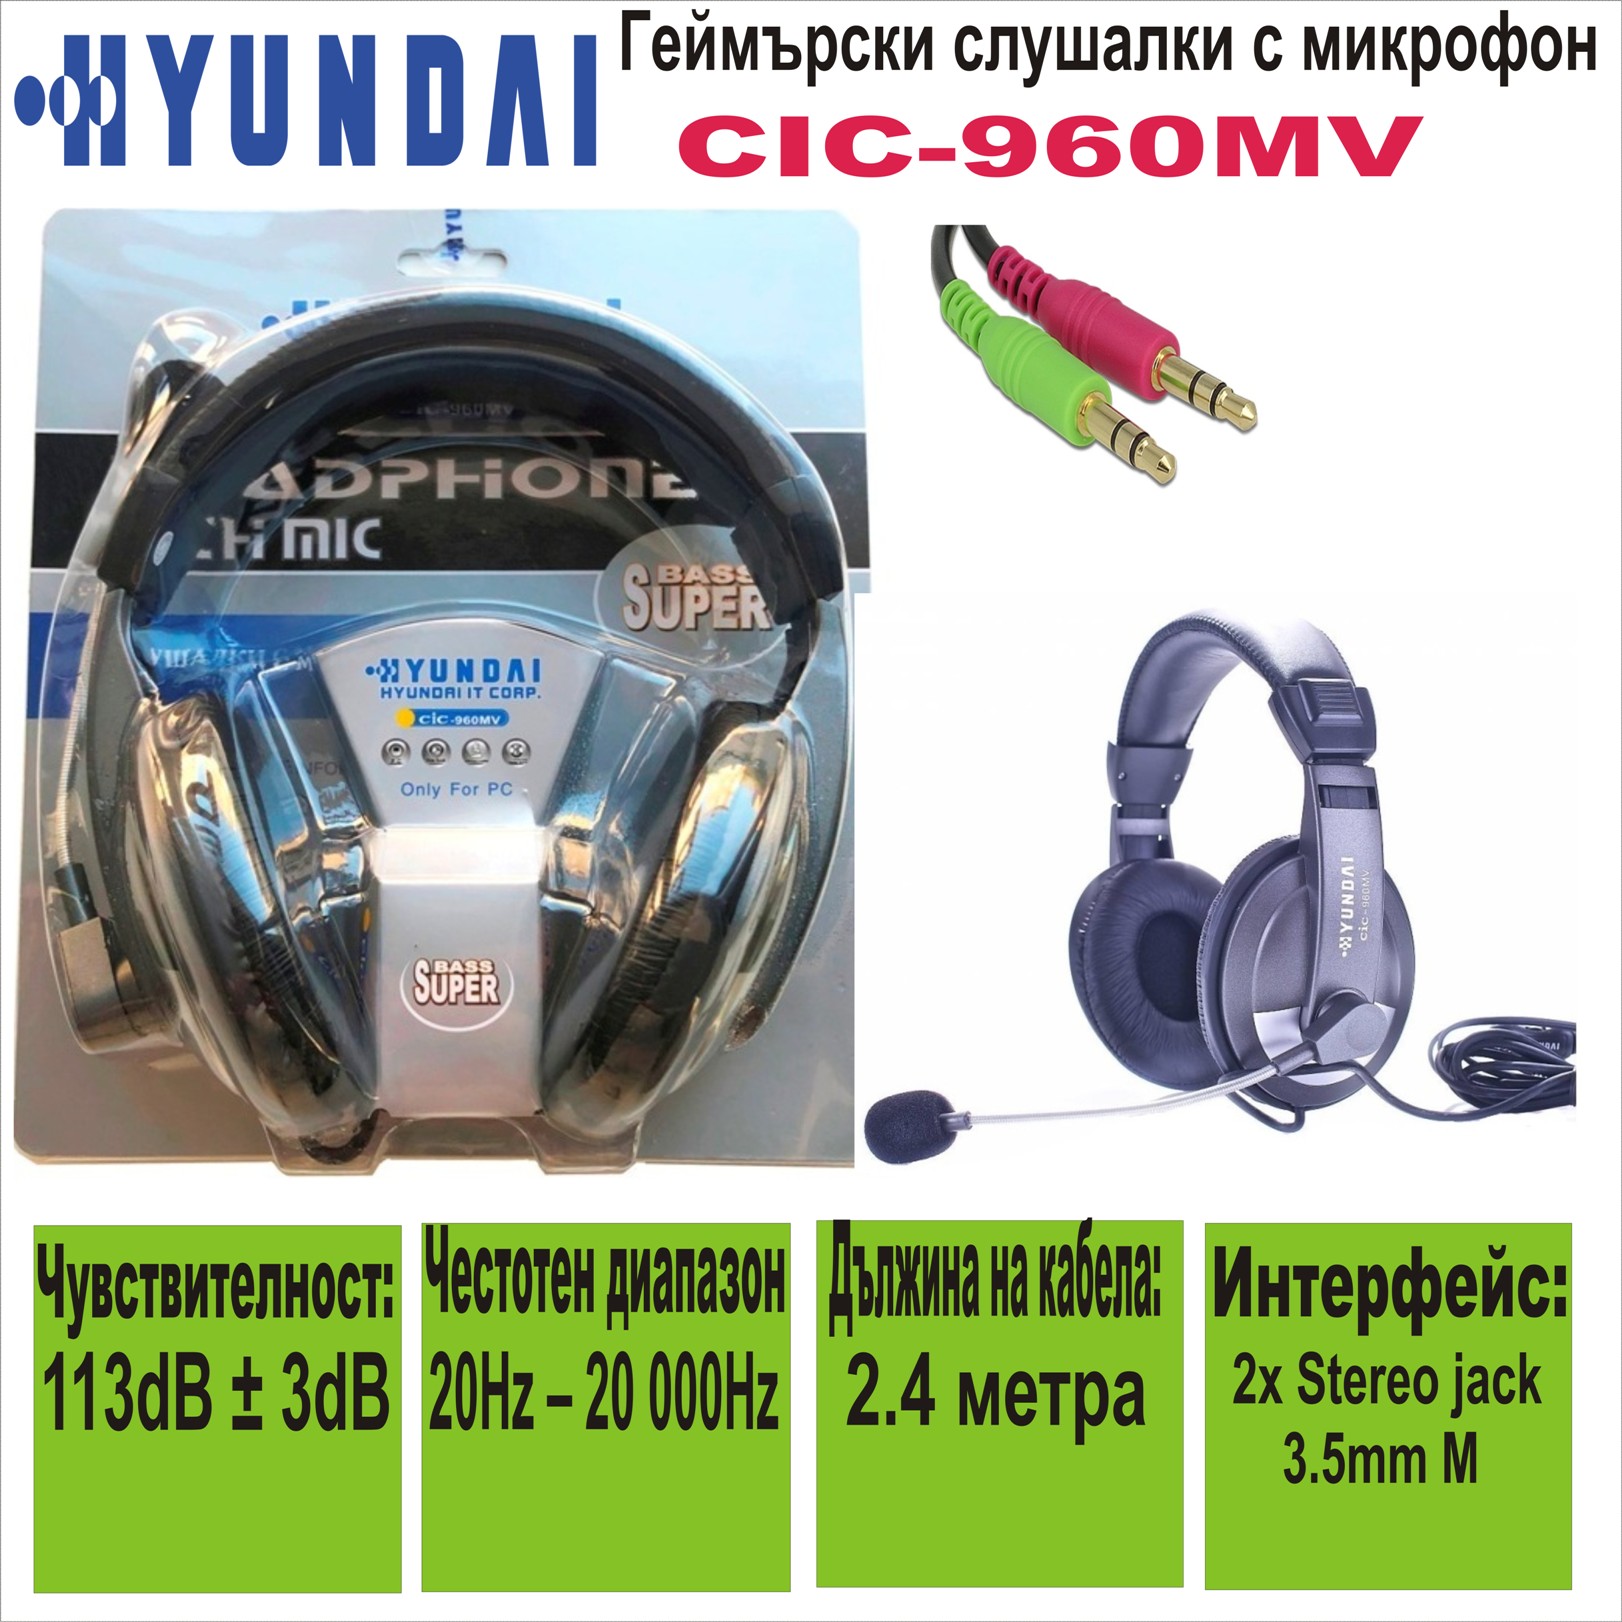 Геймърски слушалки Hyundai CIC-960MV